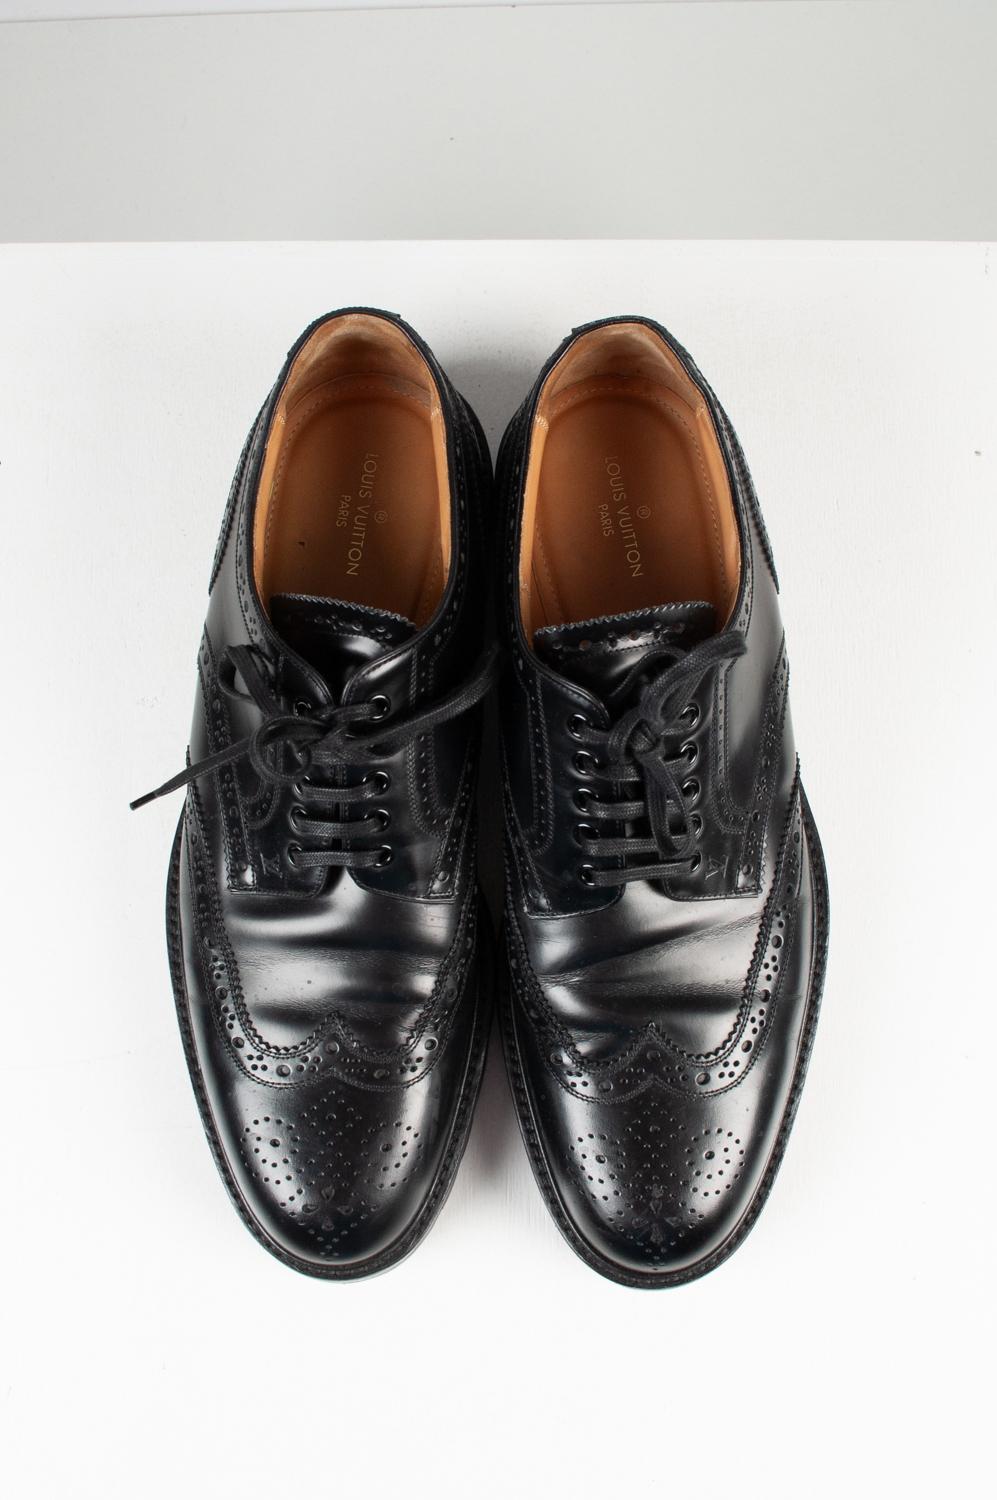 Louis Vuitton Men Shoes Oxford Derbies Size 10USA, S570 In Excellent Condition For Sale In Kaunas, LT